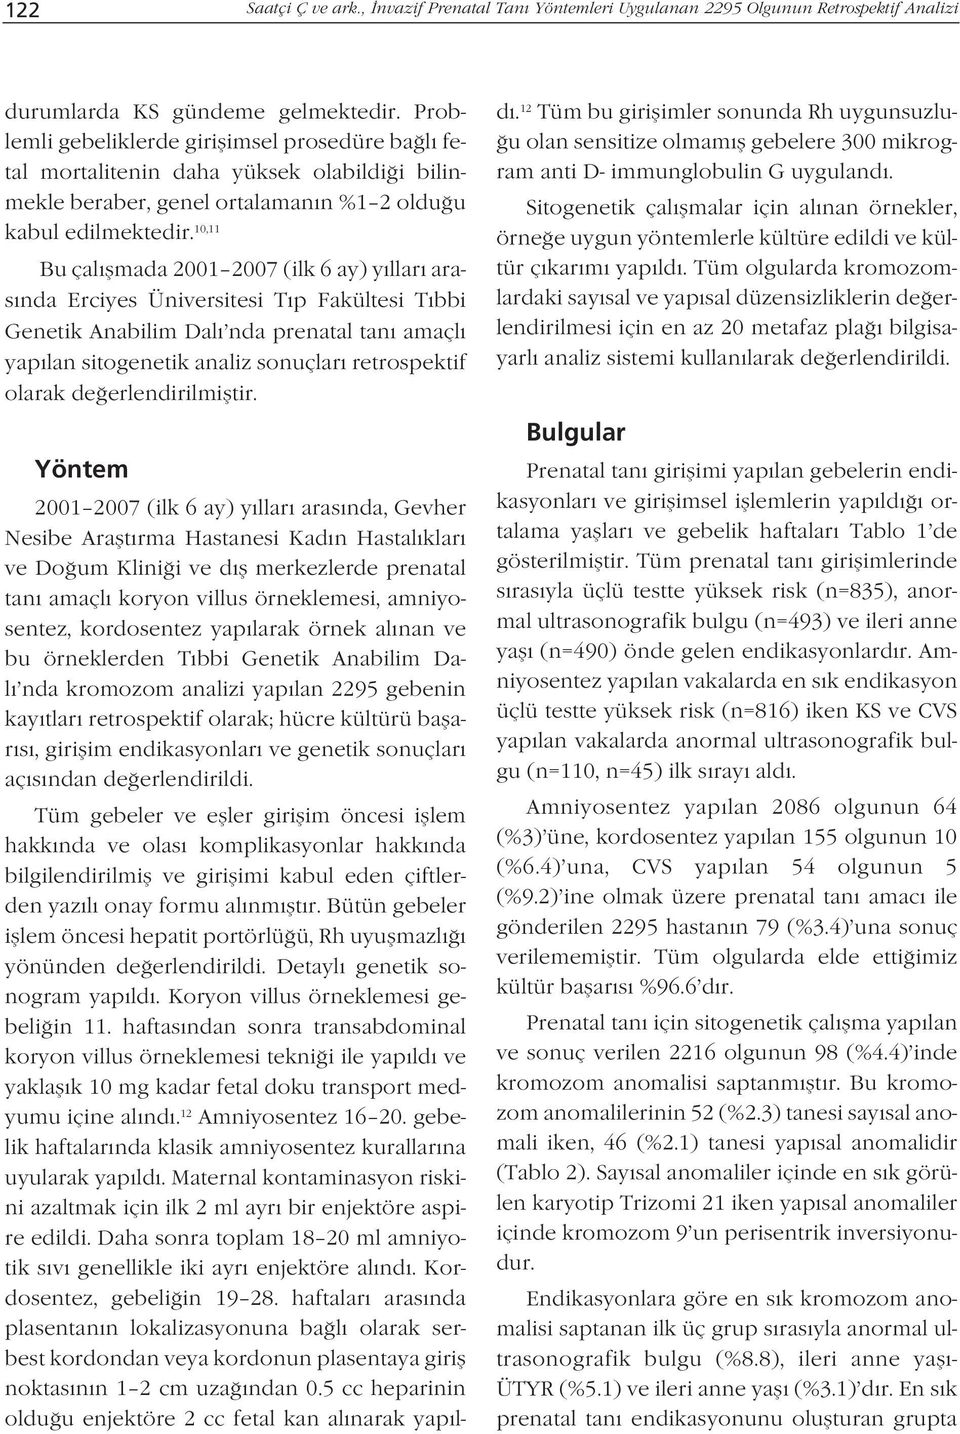 10,11 Bu çal flmada 2001 2007 (ilk 6 ay) y llar aras nda Erciyes Üniversitesi T p Fakültesi T bbi Genetik Anabilim Dal nda prenatal tan amaçl yap lan sitogenetik analiz sonuçlar retrospektif olarak